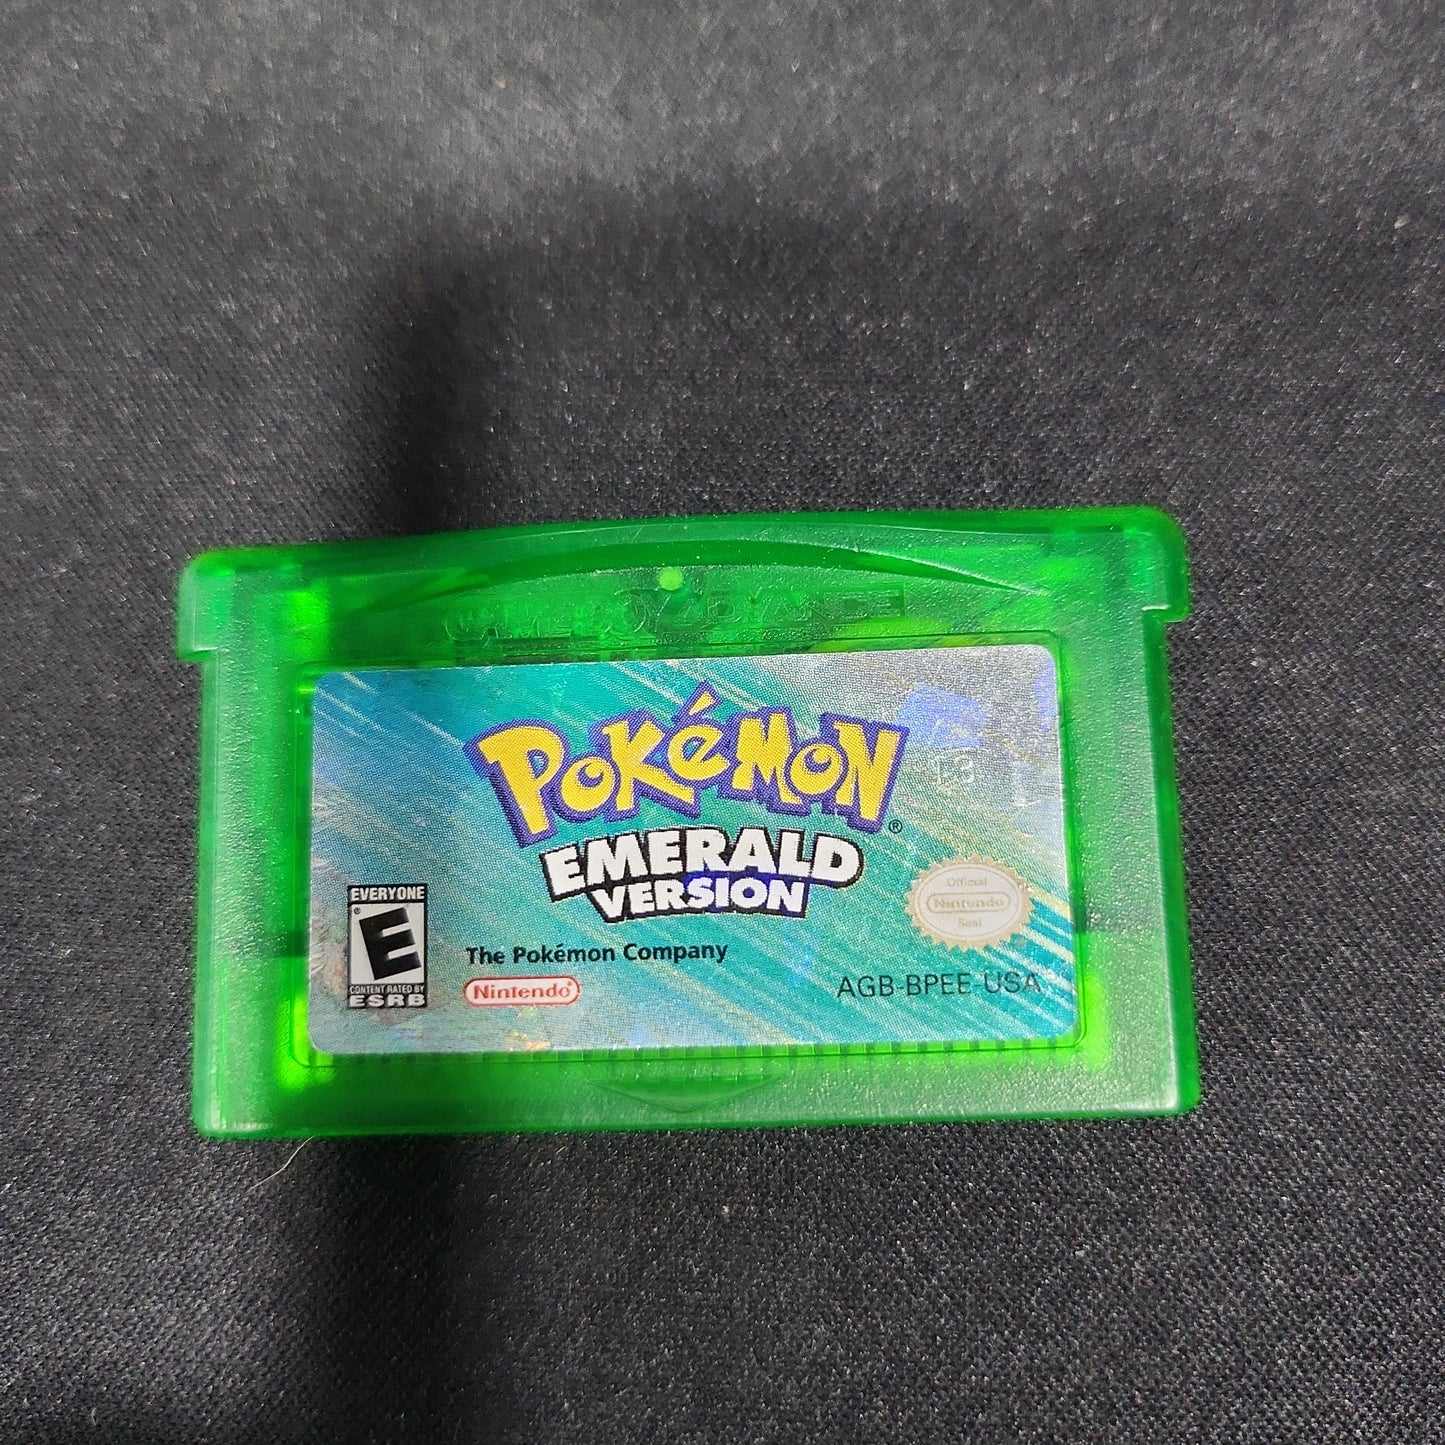 Pokemon emerald (fresh battery)